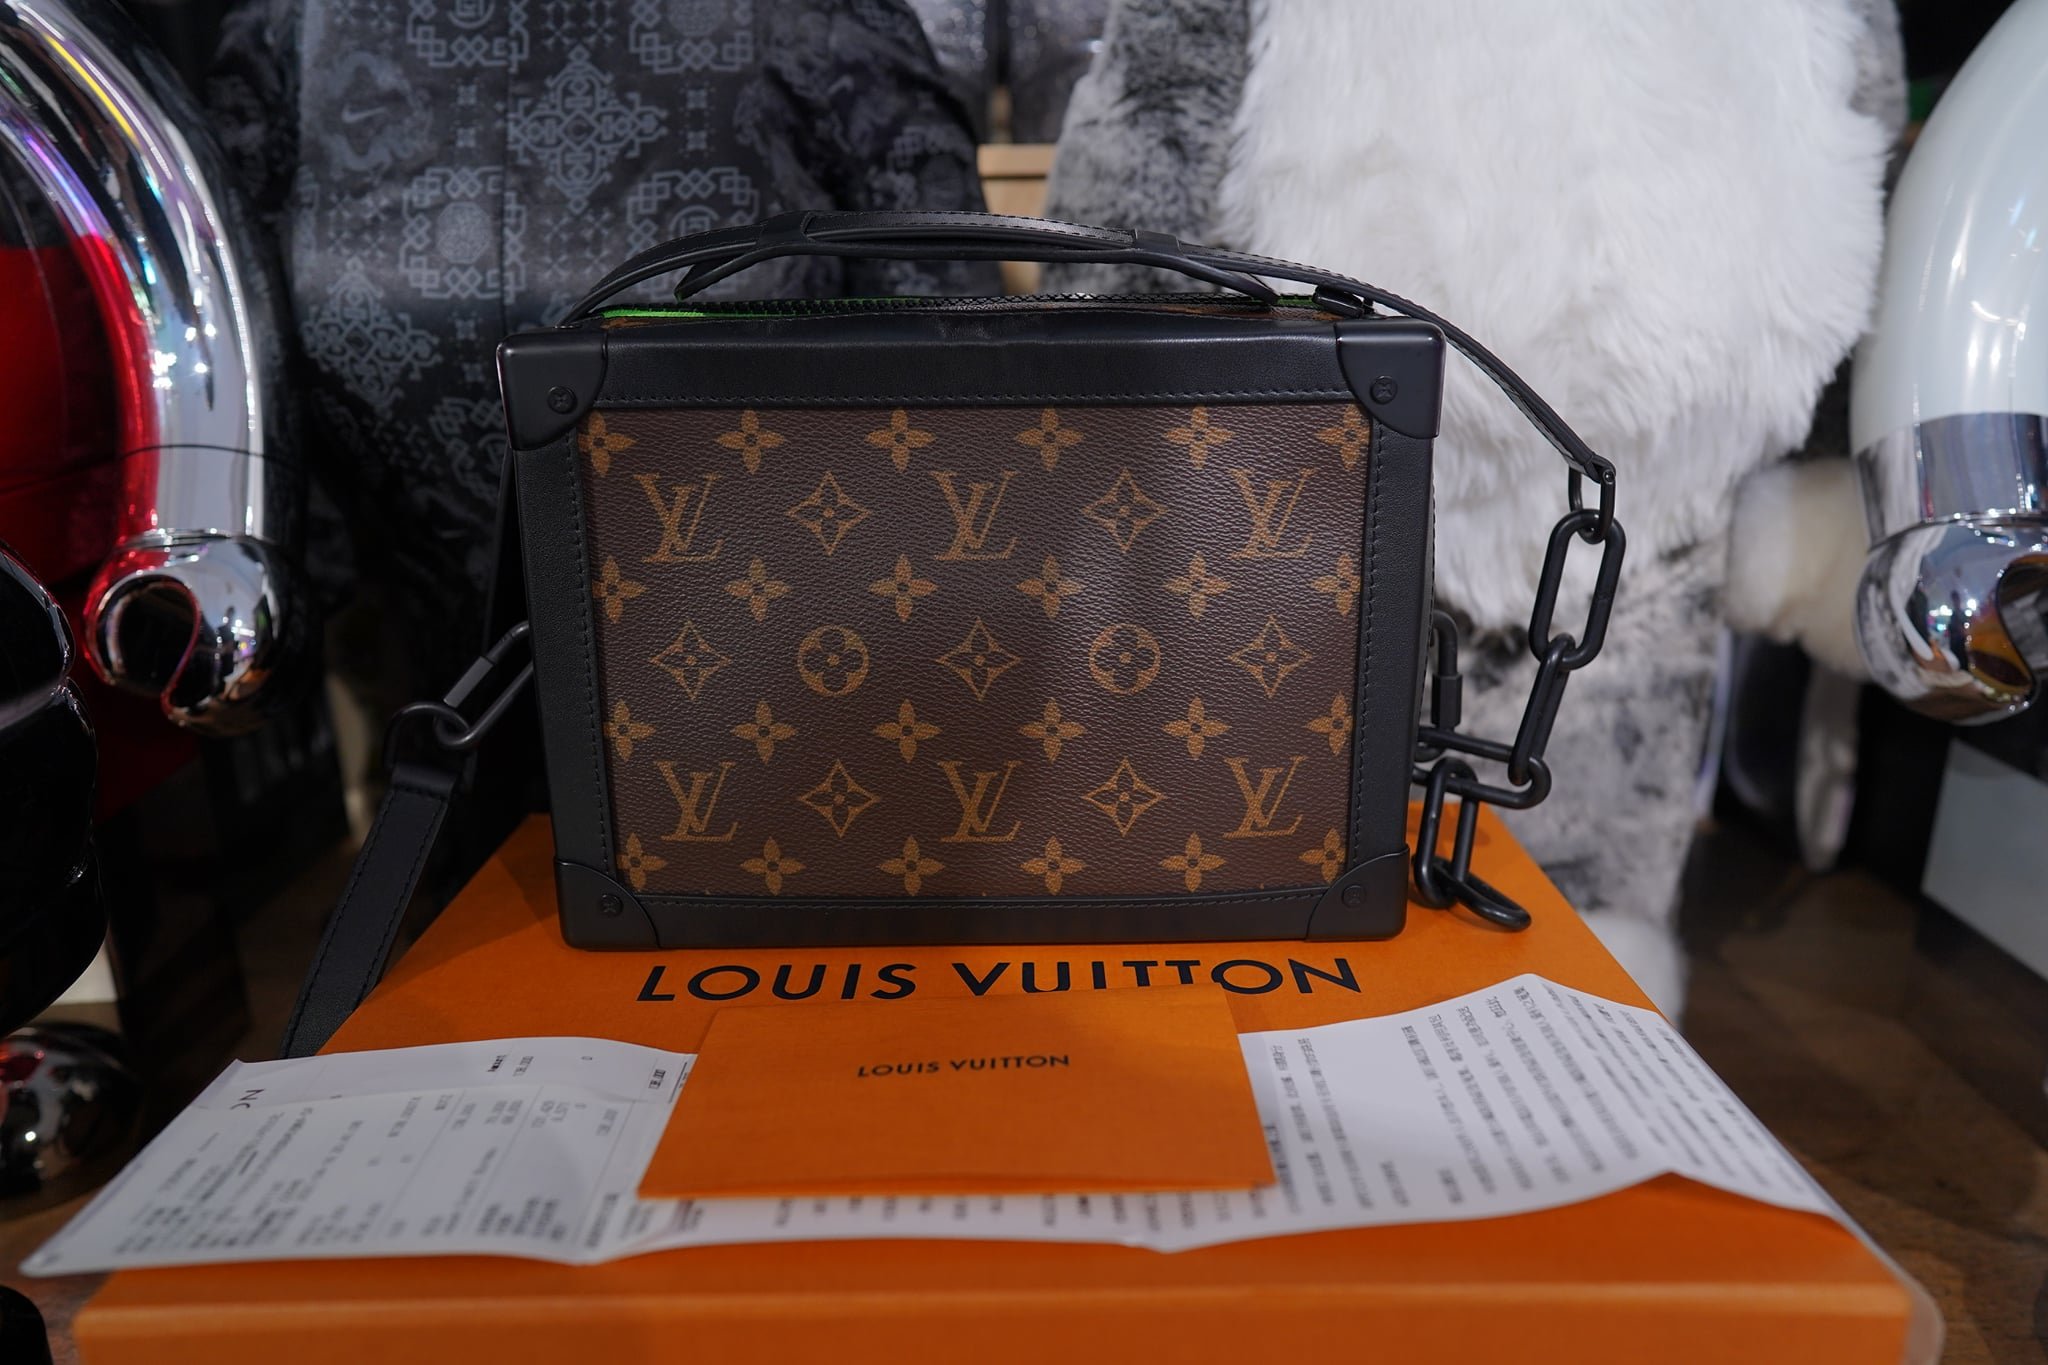 Louis Vuitton ECLIPSE Mini Soft Trunk Review, Unboxing, & Try On (Monogram  Canvas Virgil Abloh SS19) 